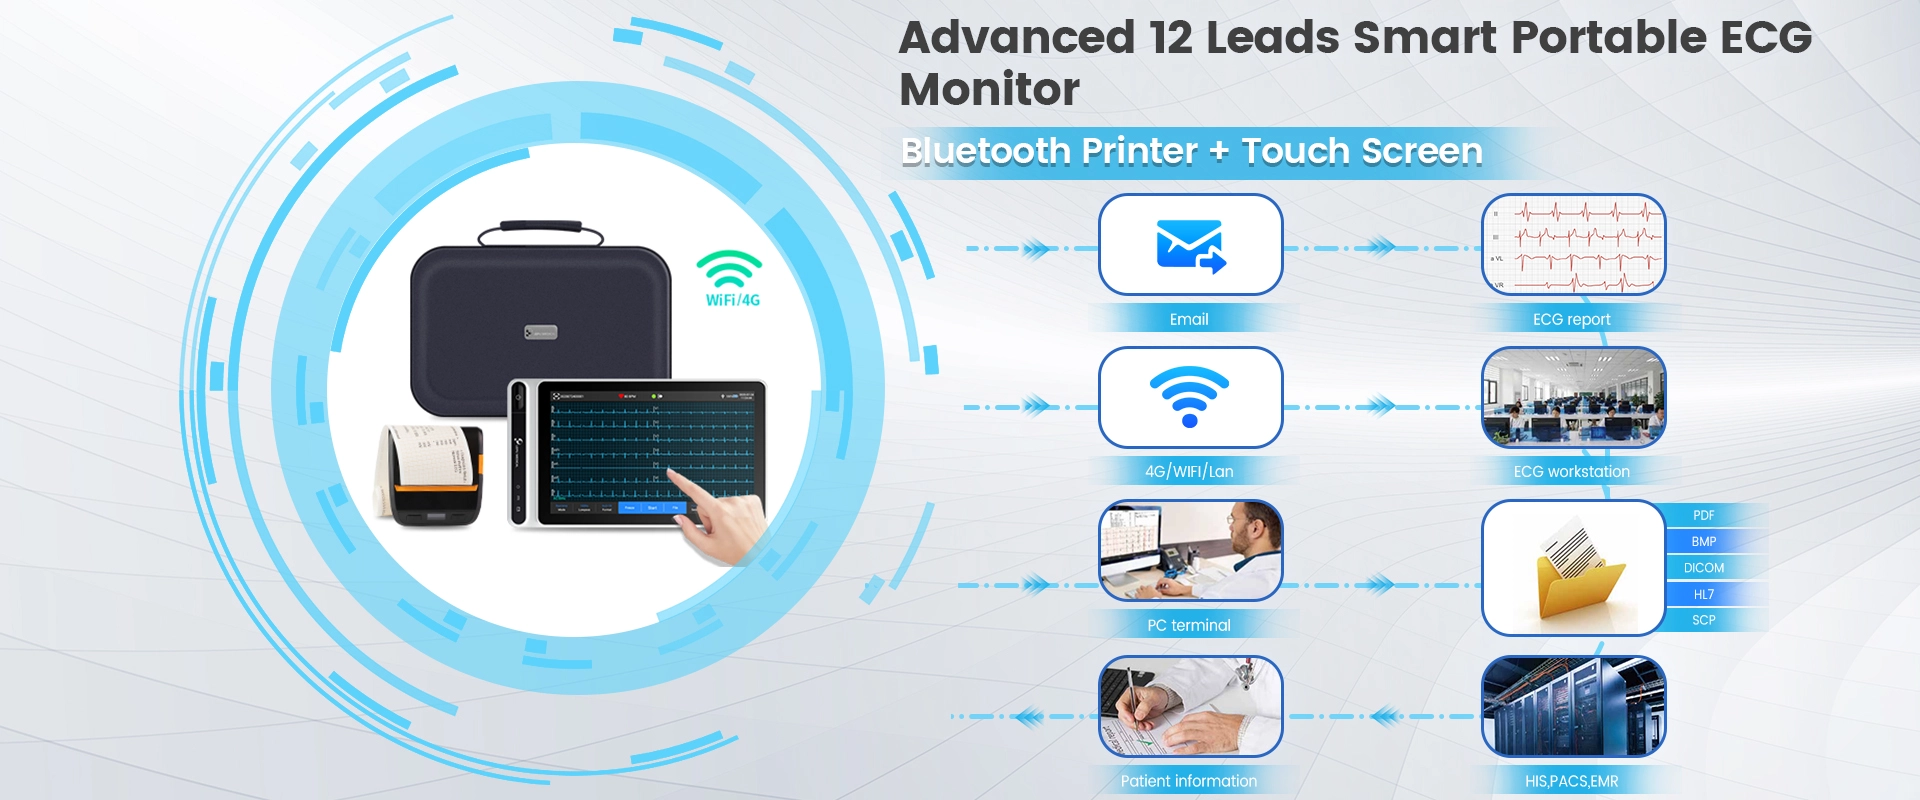 Lepu-monitor de ECG portátil inteligente de grado médico de 12 leads S120 con impresora Bluetooth, diagnóstico de análisis de IA, pantalla táctil de la tableta